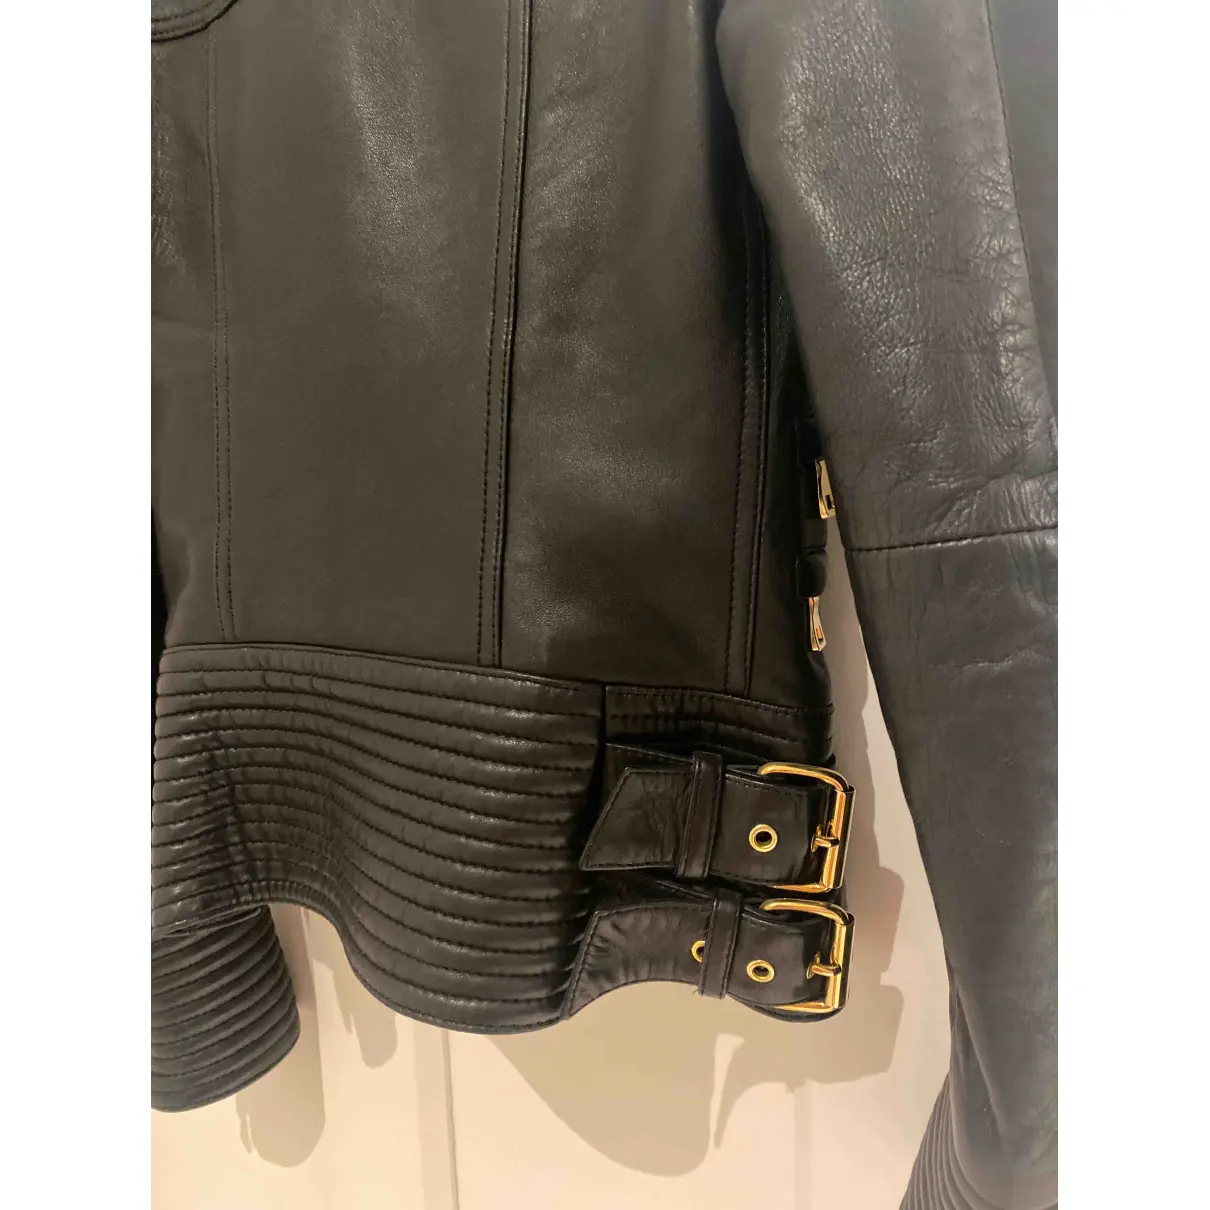 Leather biker jacket Balmain